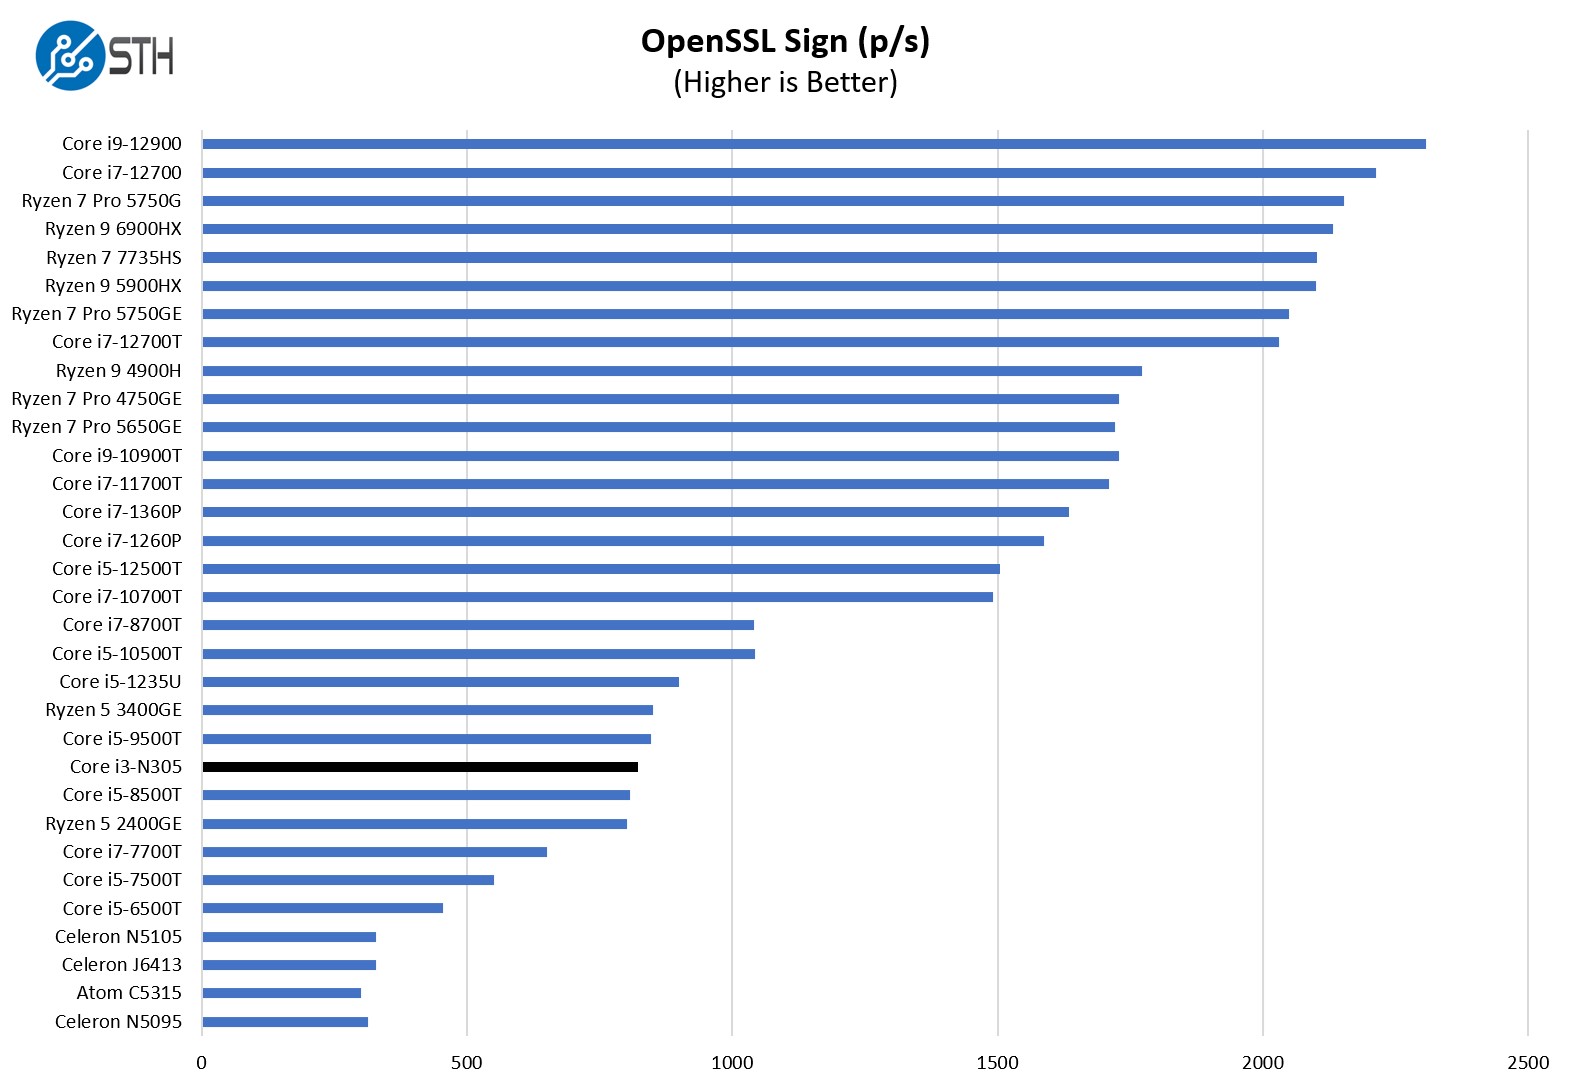 Intel Core I3 N305 OpenSSL Sign Benchmark - ServeTheHome